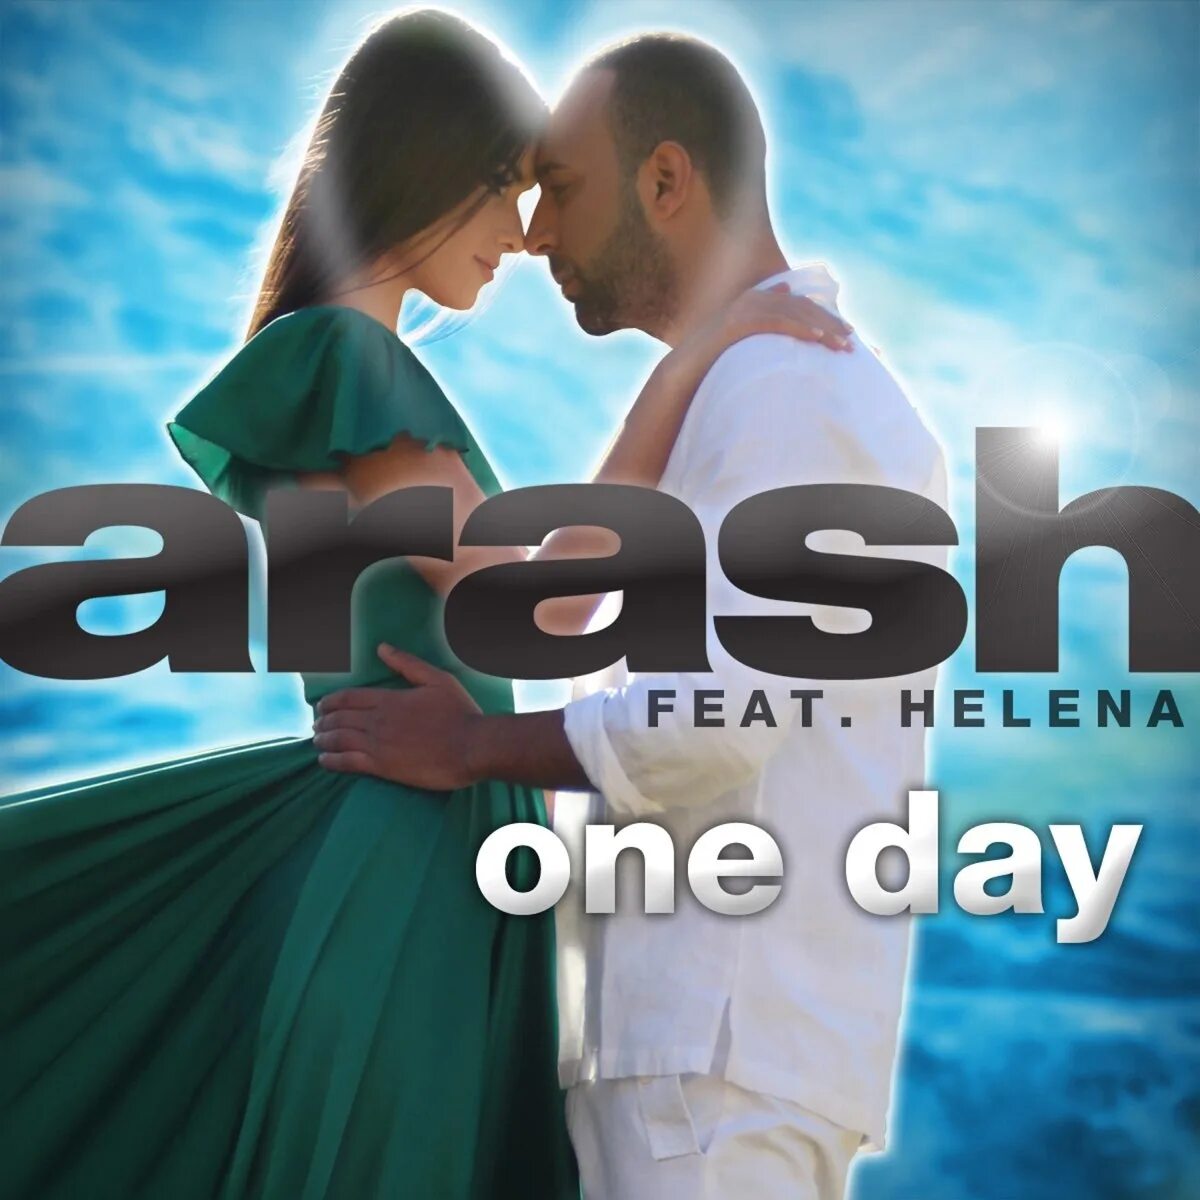 Arash Helena. Араш и Хелена one Day. One Day Arash feat Helena. One Day араш.